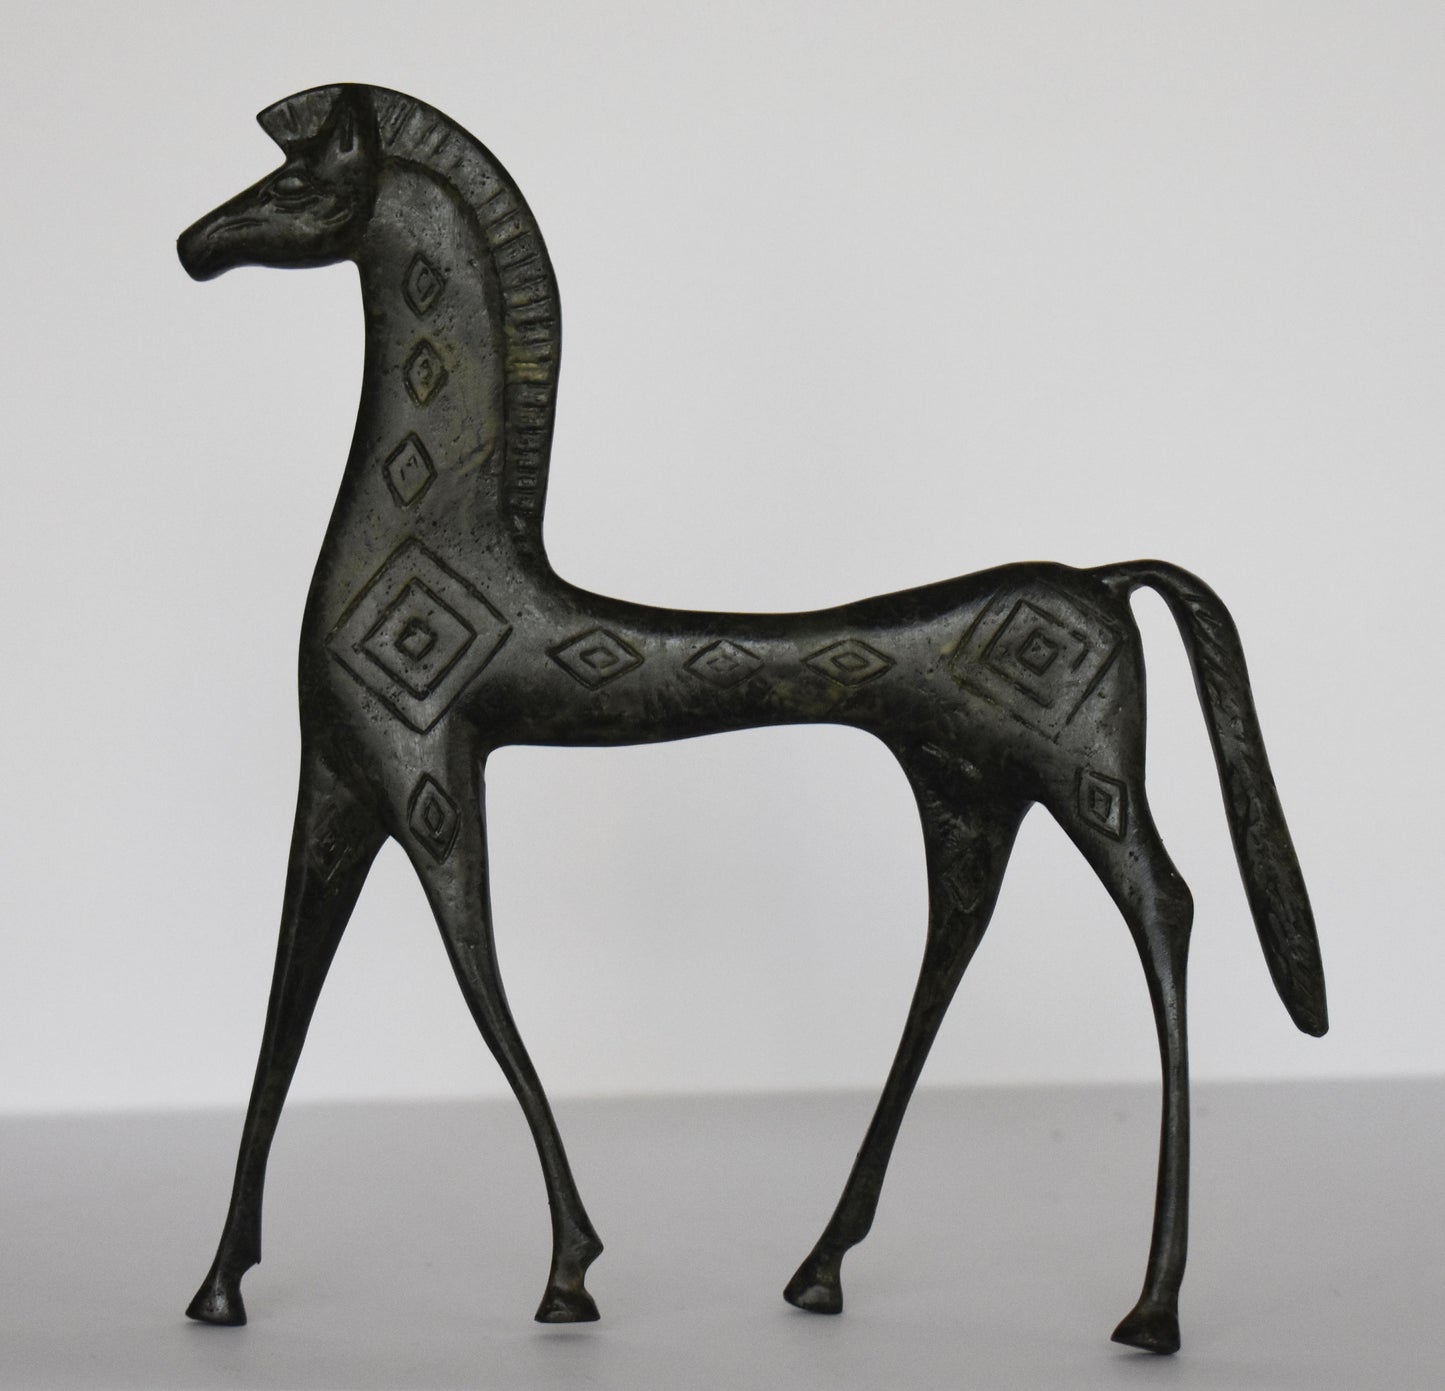 Ancient Greek Horse - pure Bronze Sculpture - Meander Design - Symbol of Wealth and Prosperity